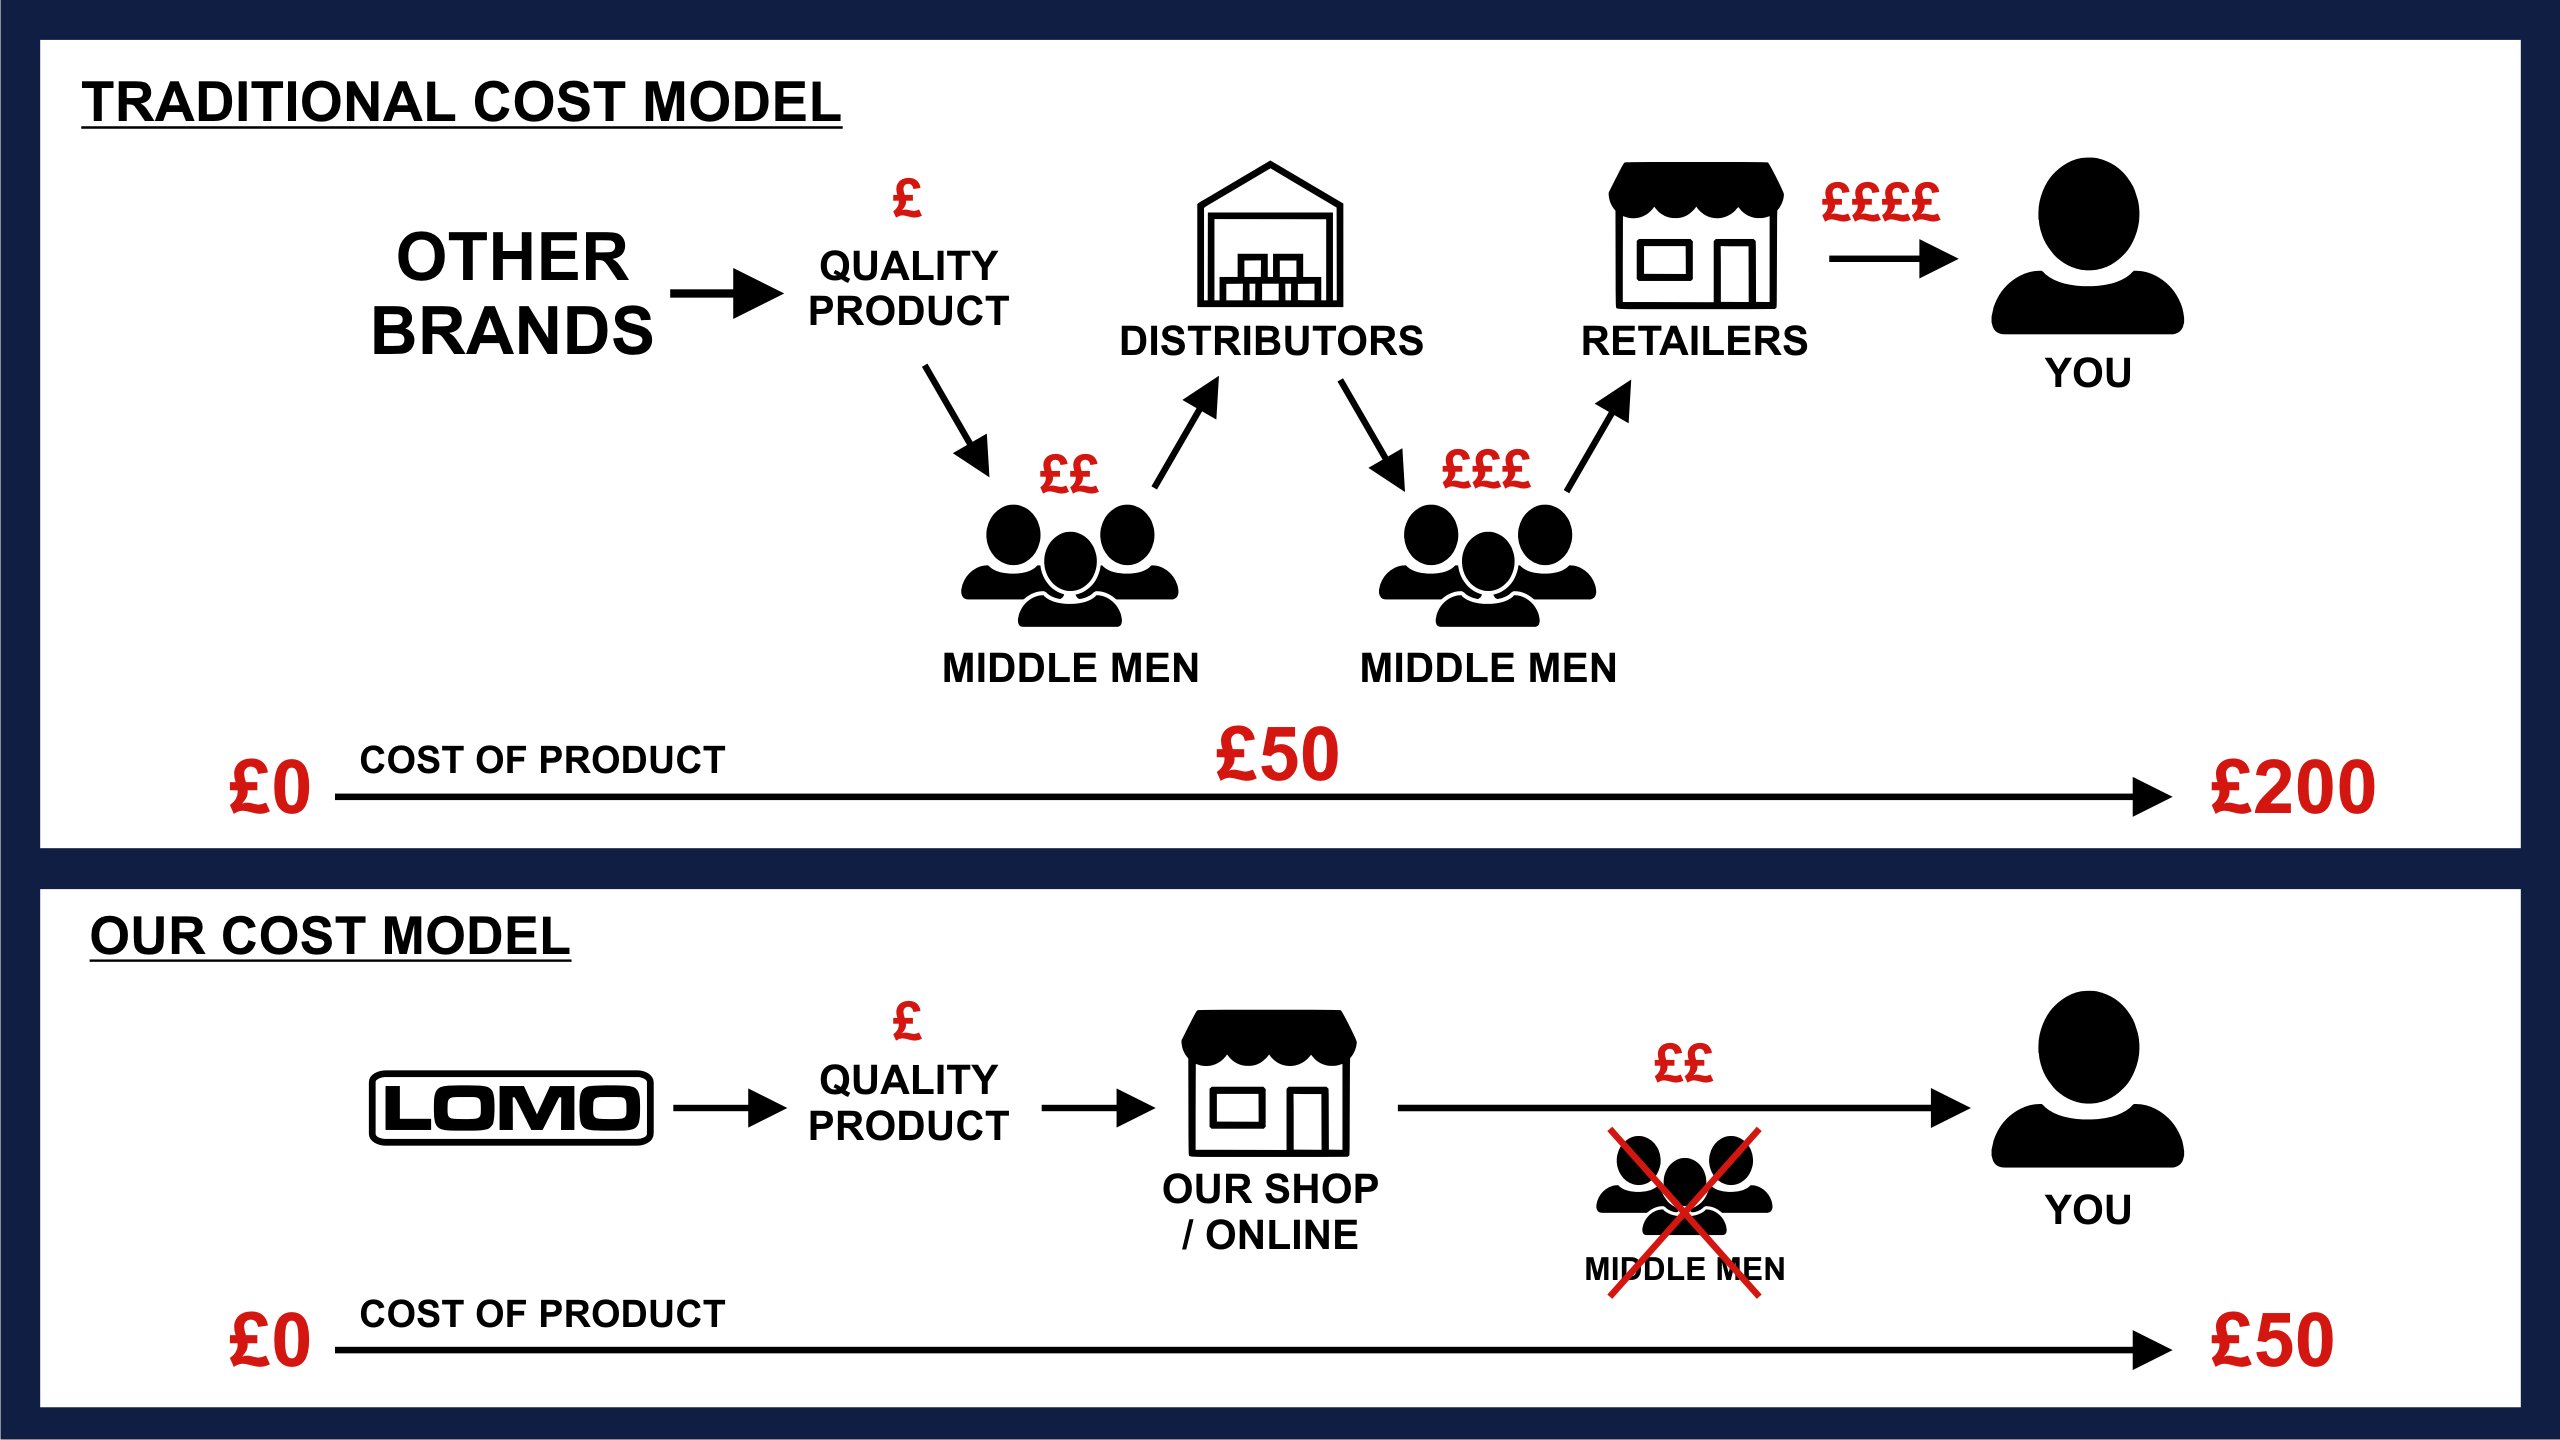 Lomo Cost Model